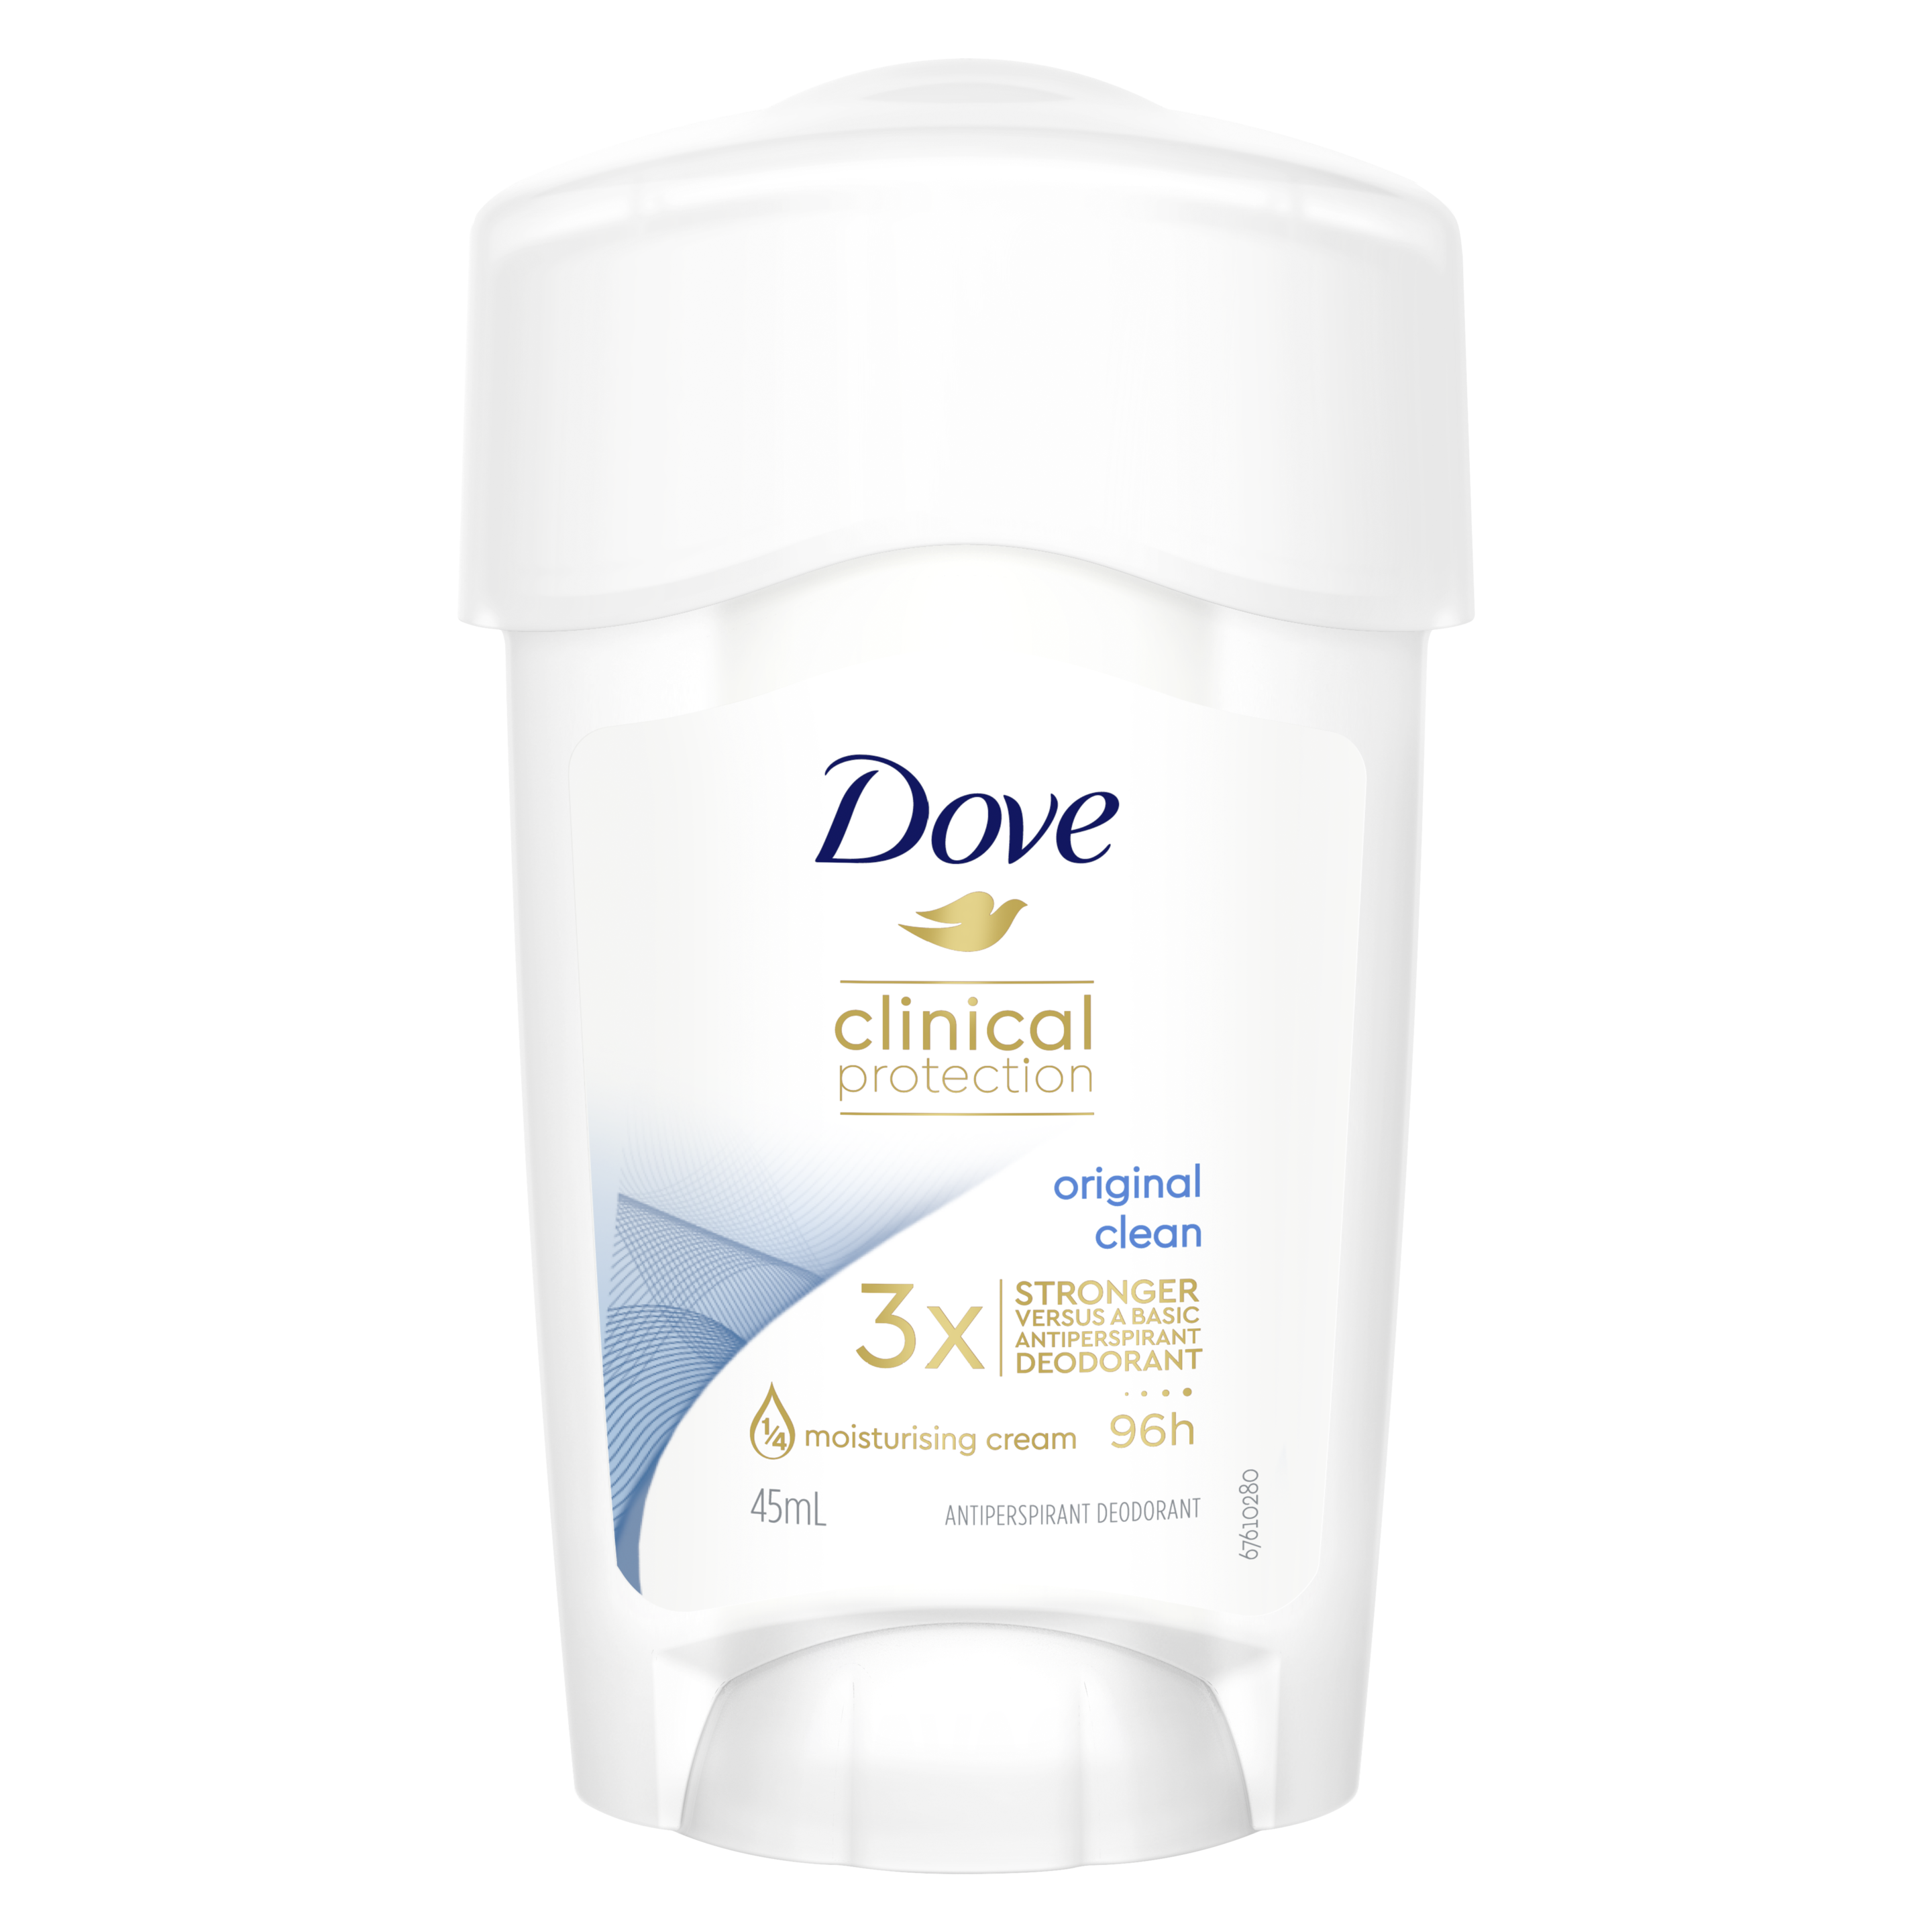 Dove Clinical Protection Original Deodorant 45ml